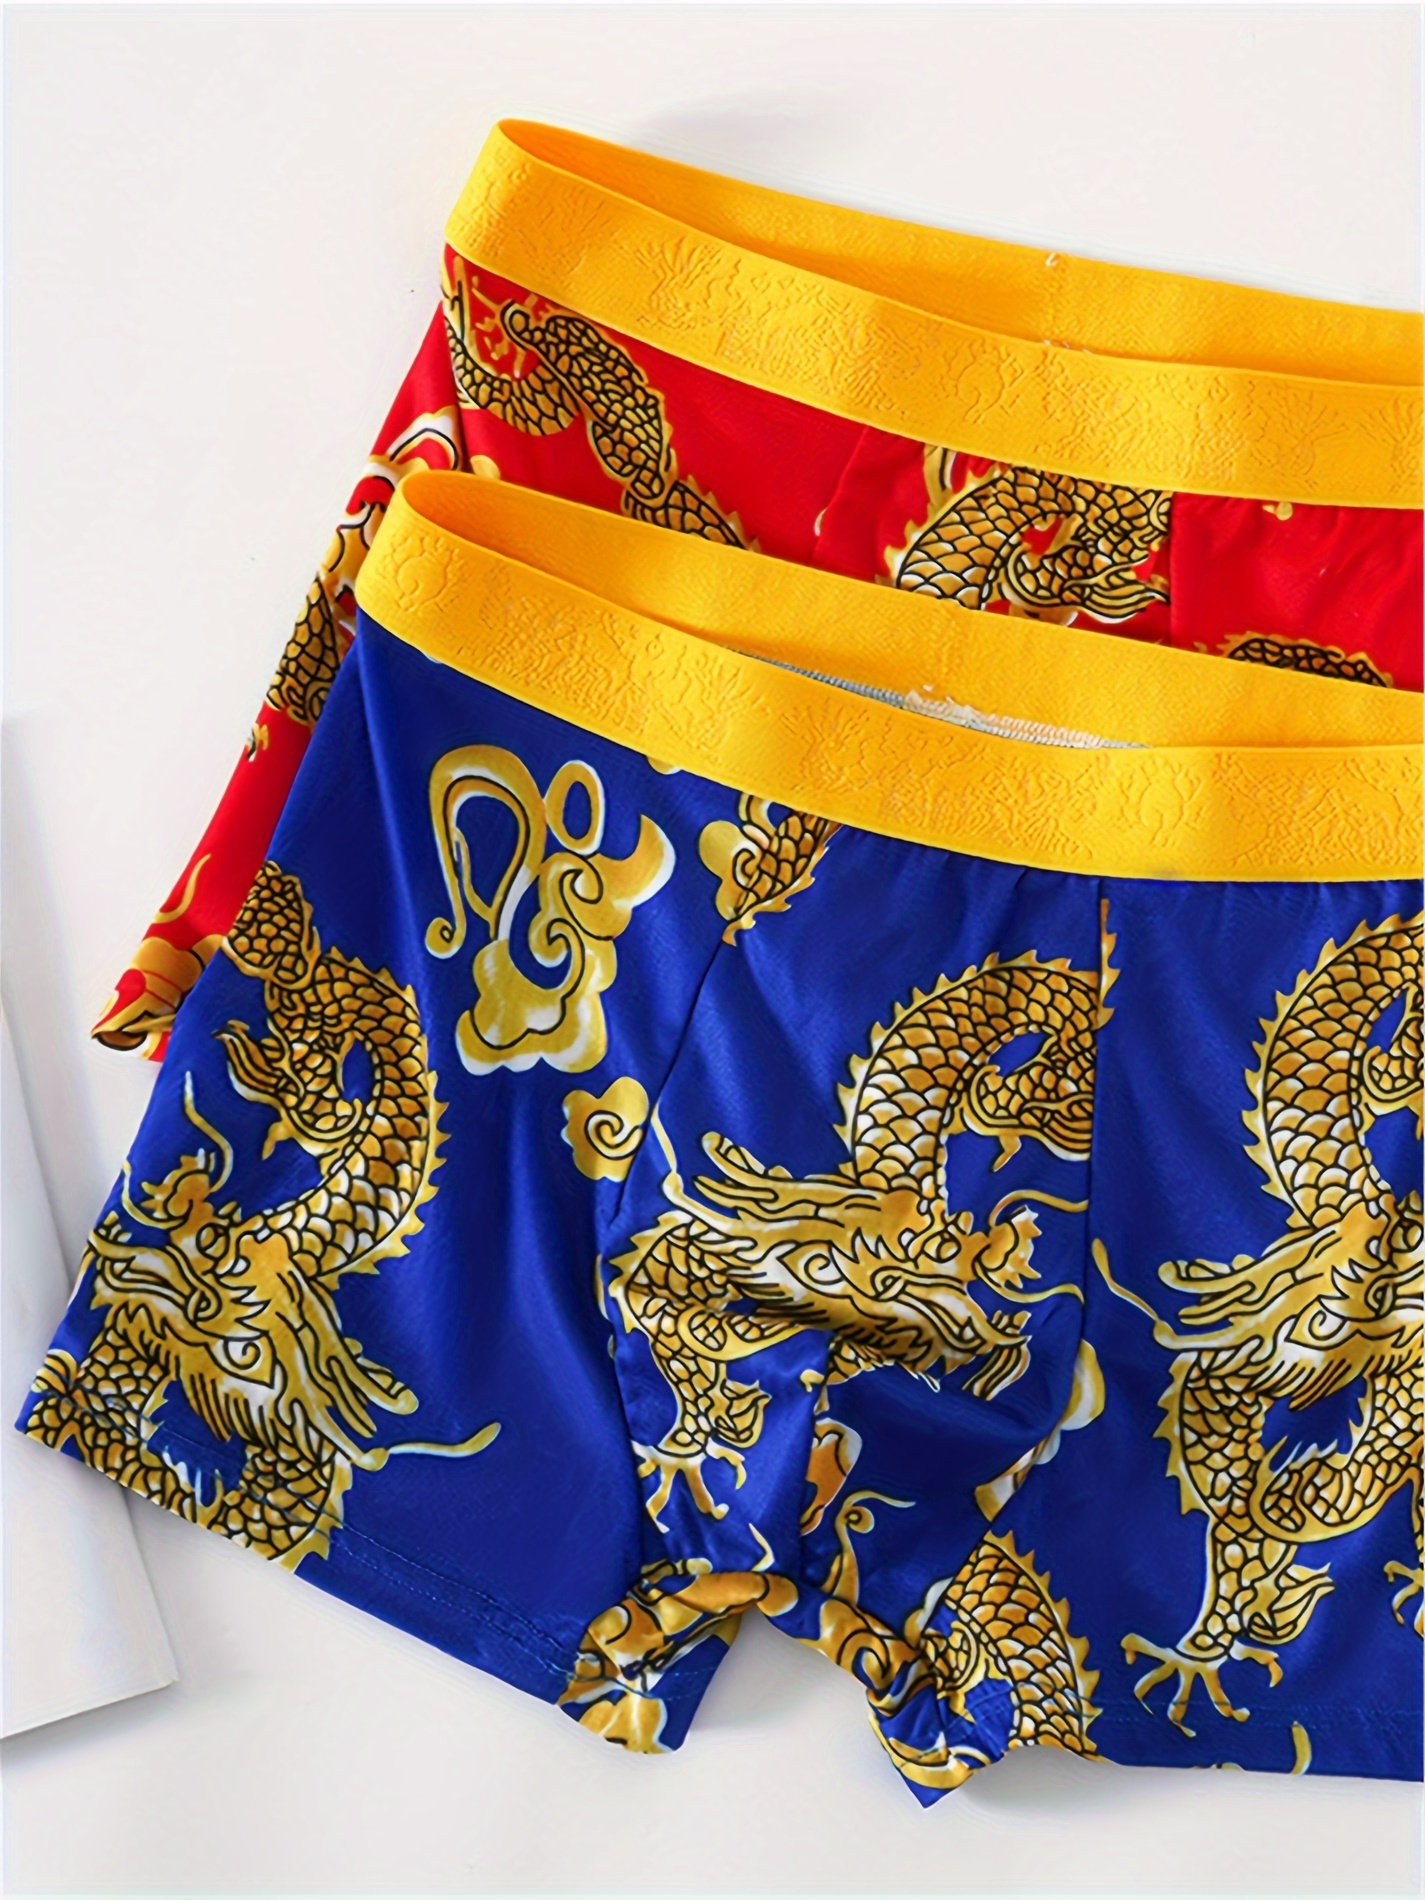 4pcs Men's Chinese New Year Dragon Print Fashion Breathable Soft Comfy  Boxer Briefs, Cotton Underpants, Men's Underwear